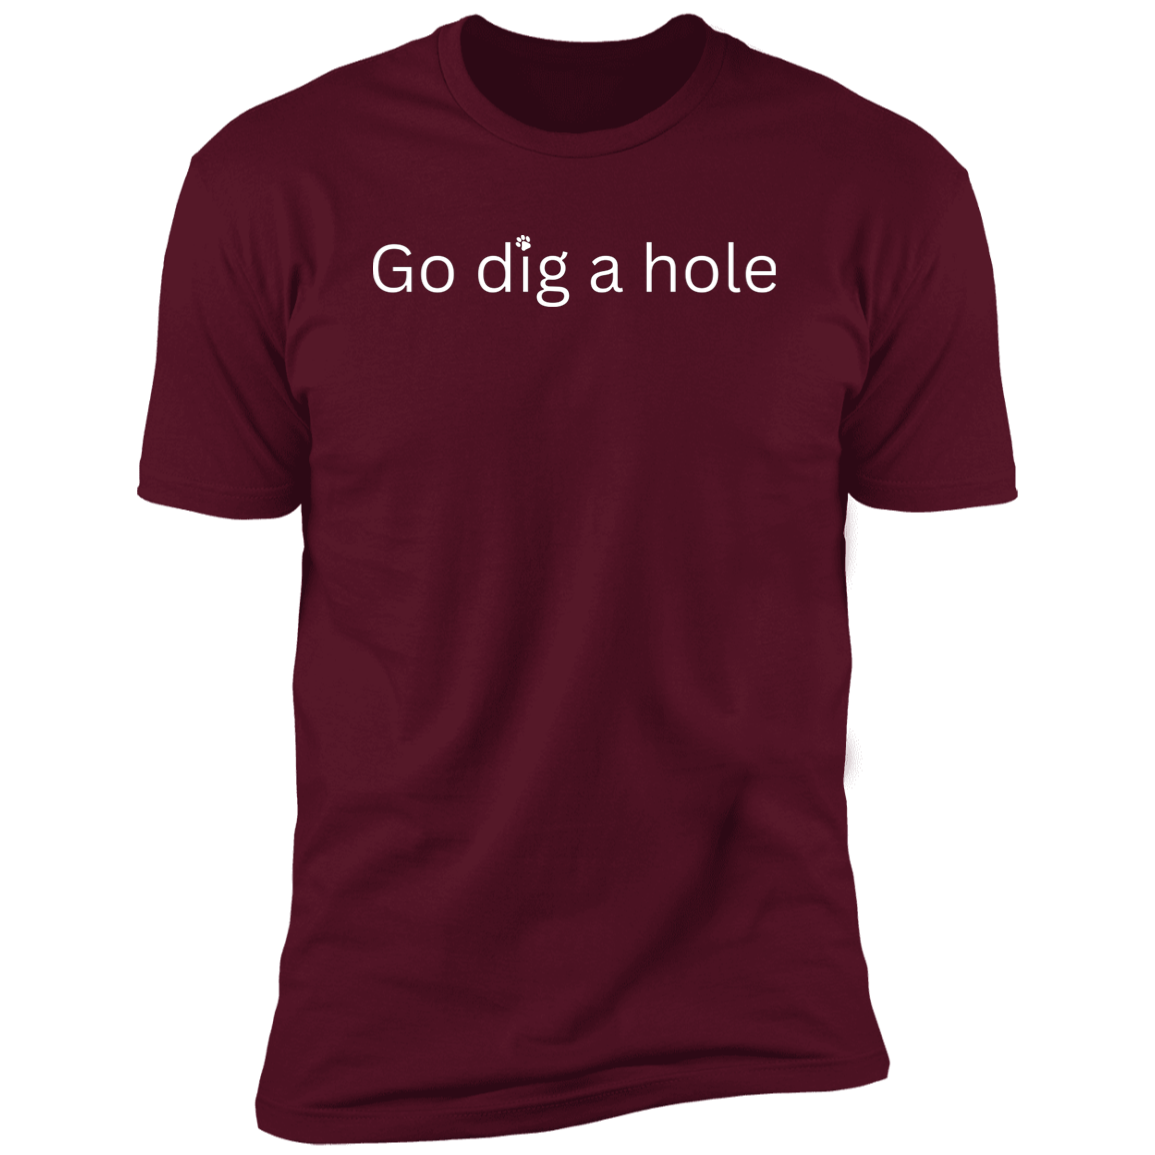 Go Dig a Hole Dog T-Shirt, Dog shirt for humans, funny dog shirt, funny t-shirt, in maroon